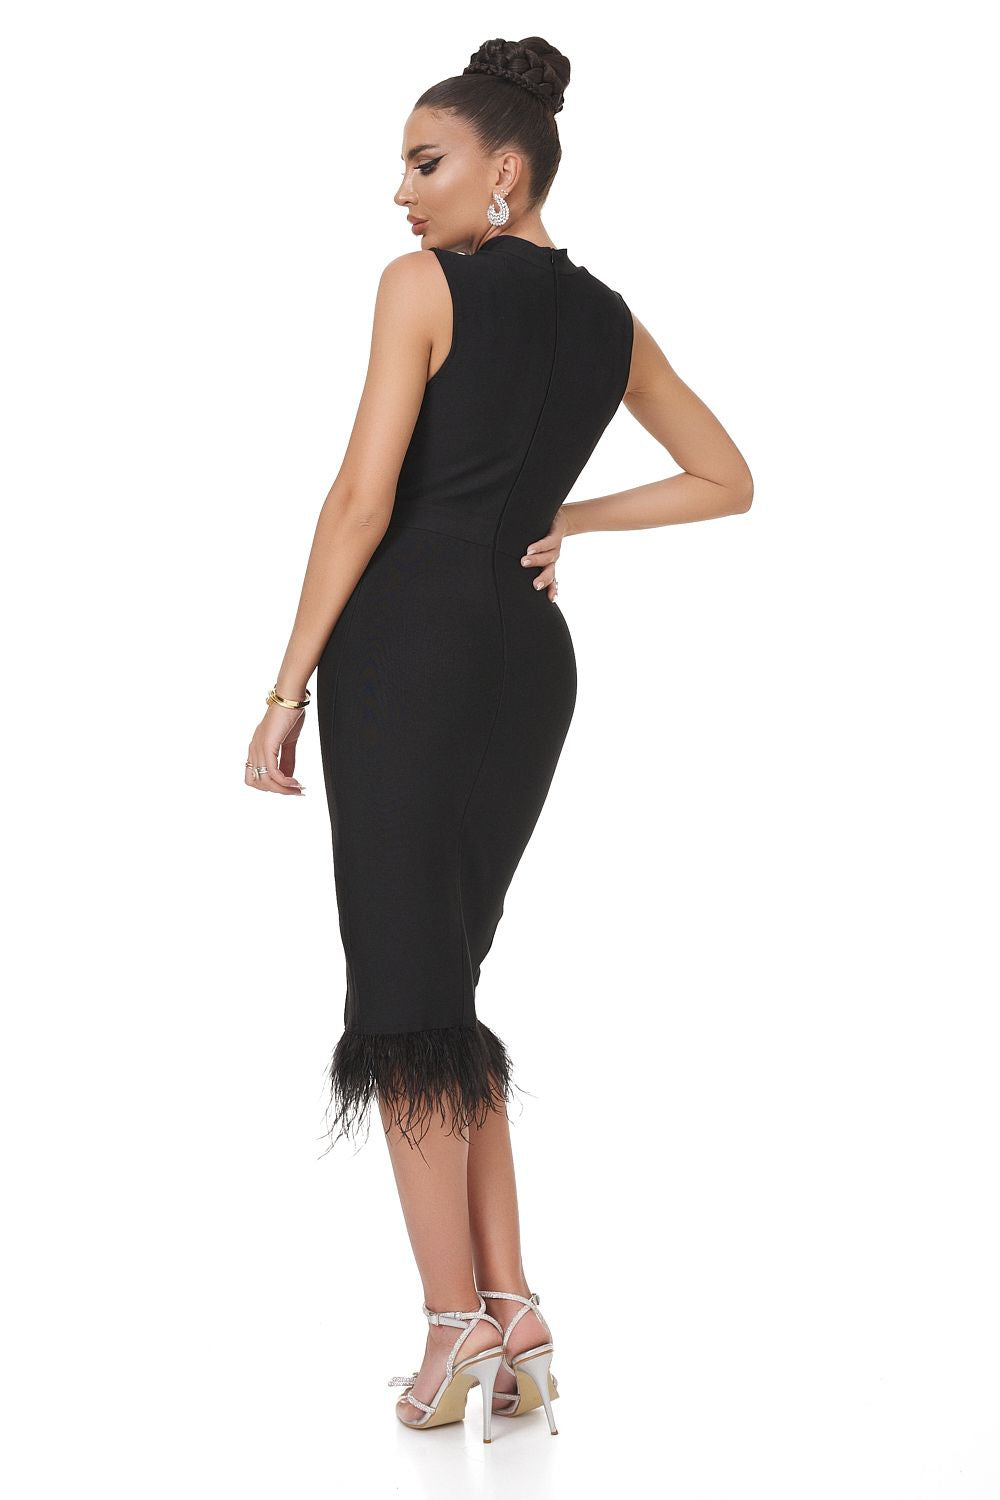 Black midi dress for women Valencia Bogas